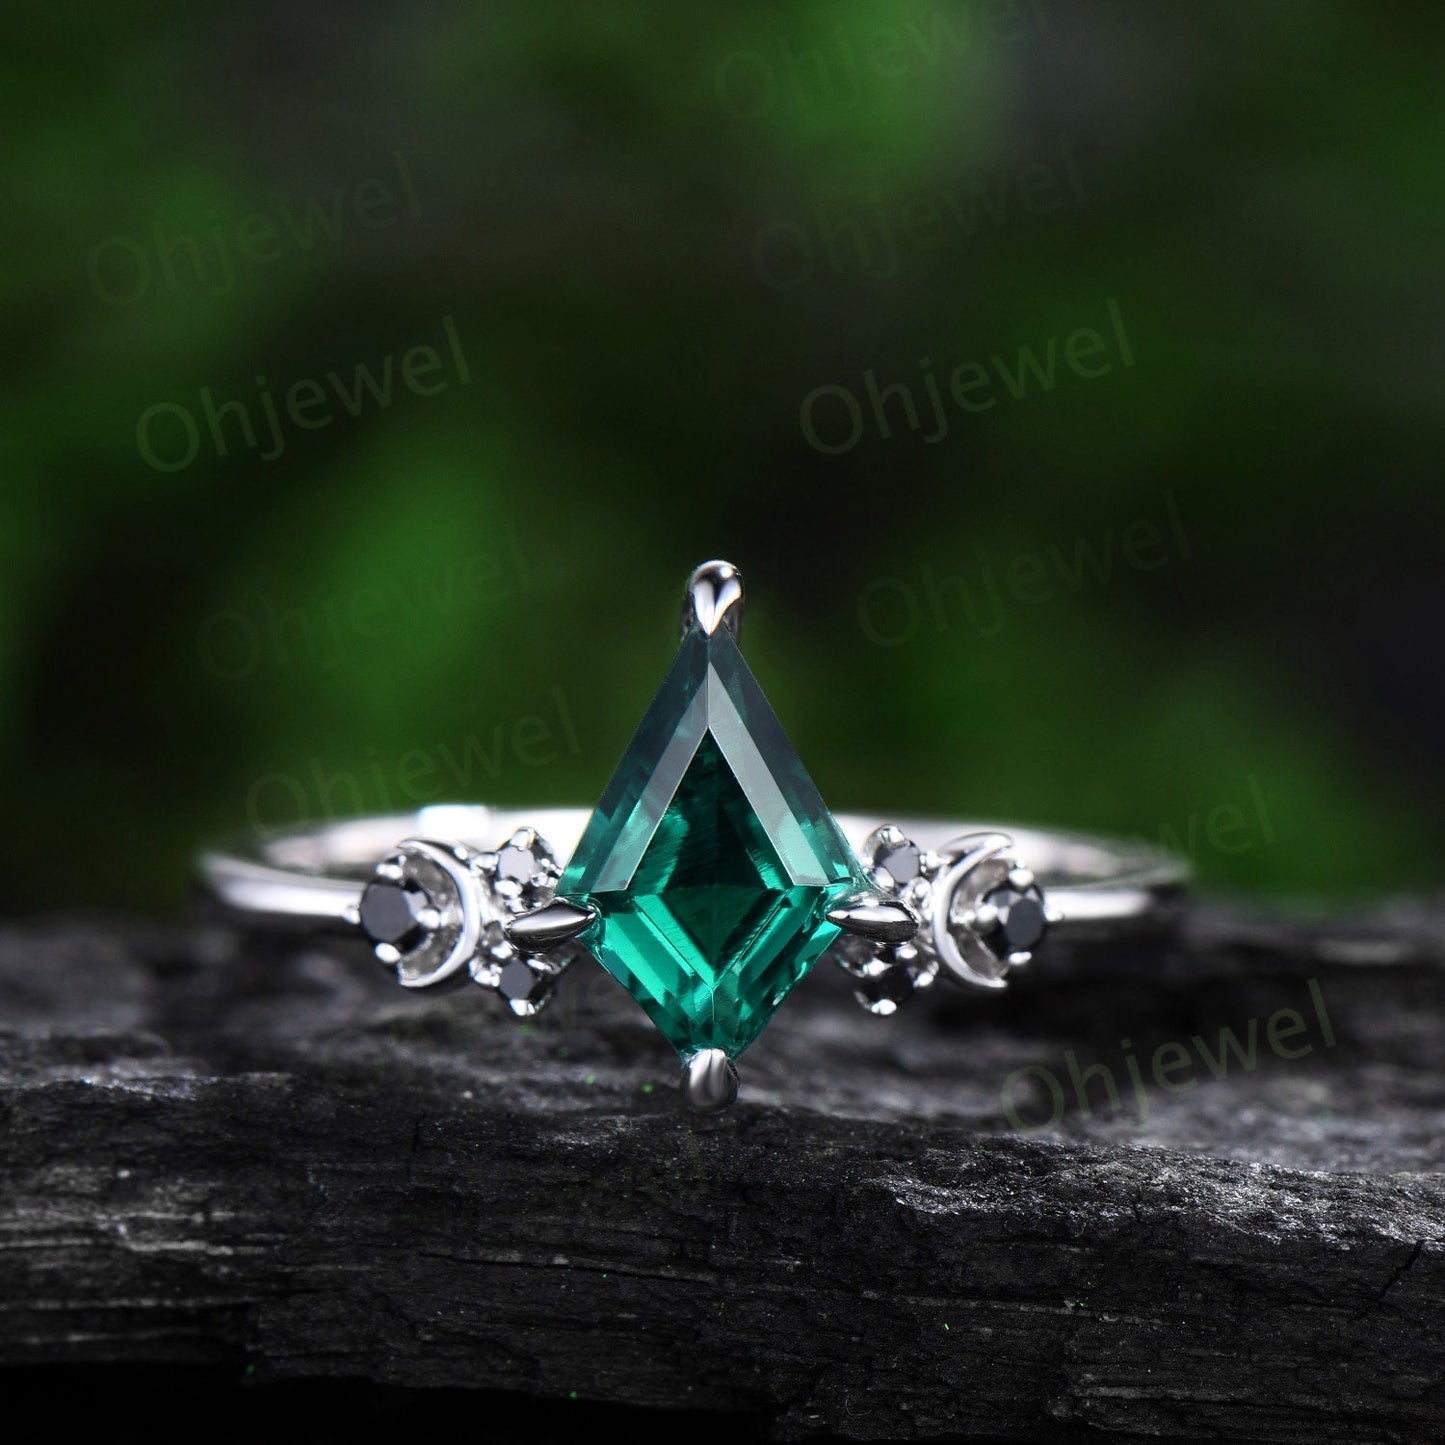 Moon black diamond ring vintage kite cut green emerald engagement ring set solid 14k white gold unique anniversary wedding ring set women